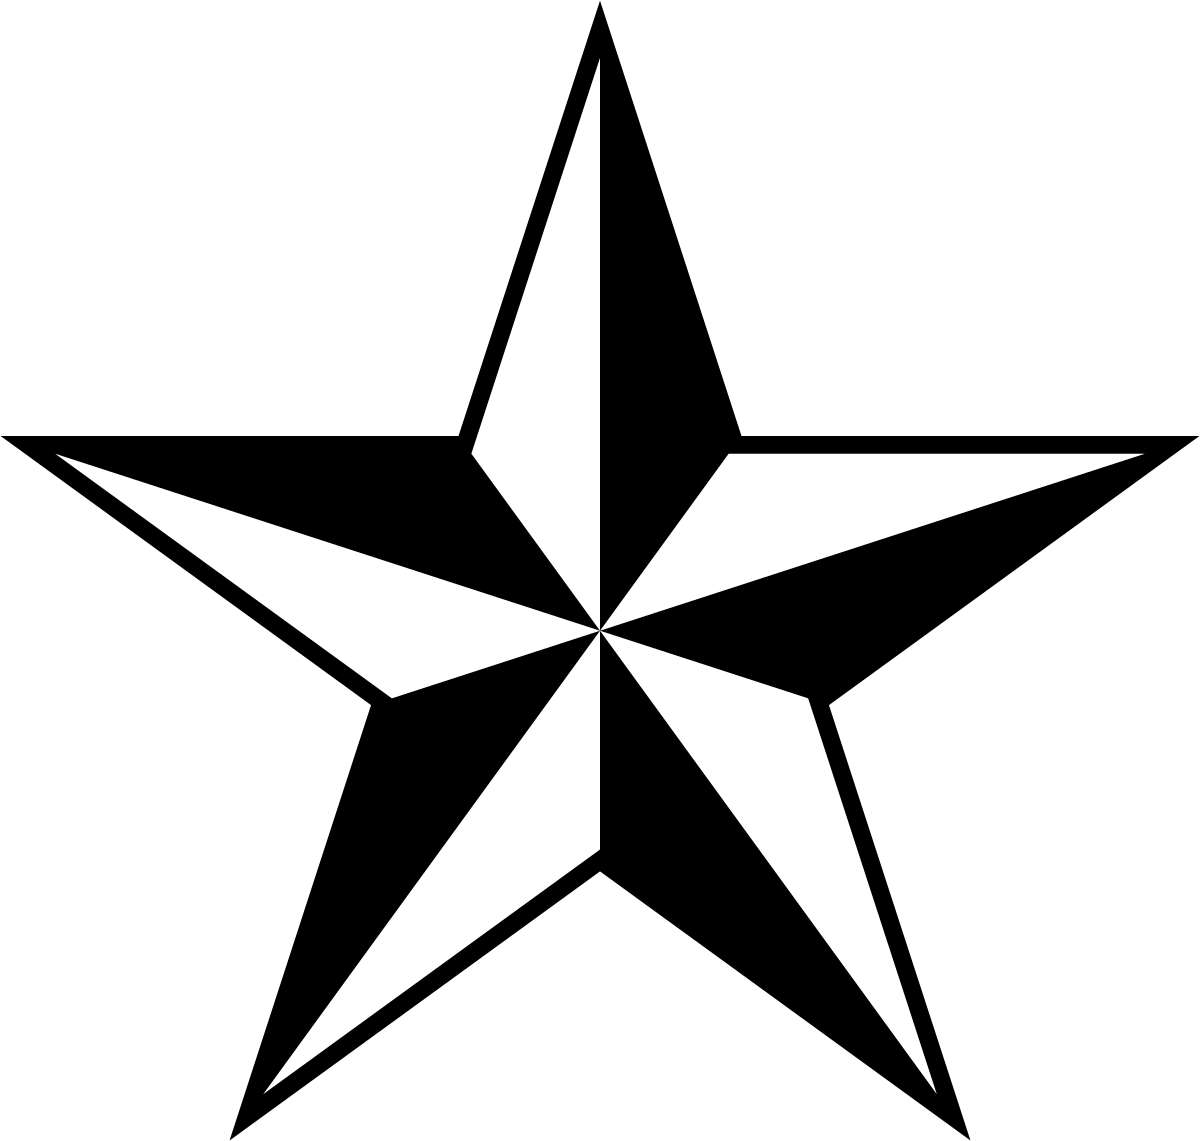 Black and White Star Logo - Nautical star